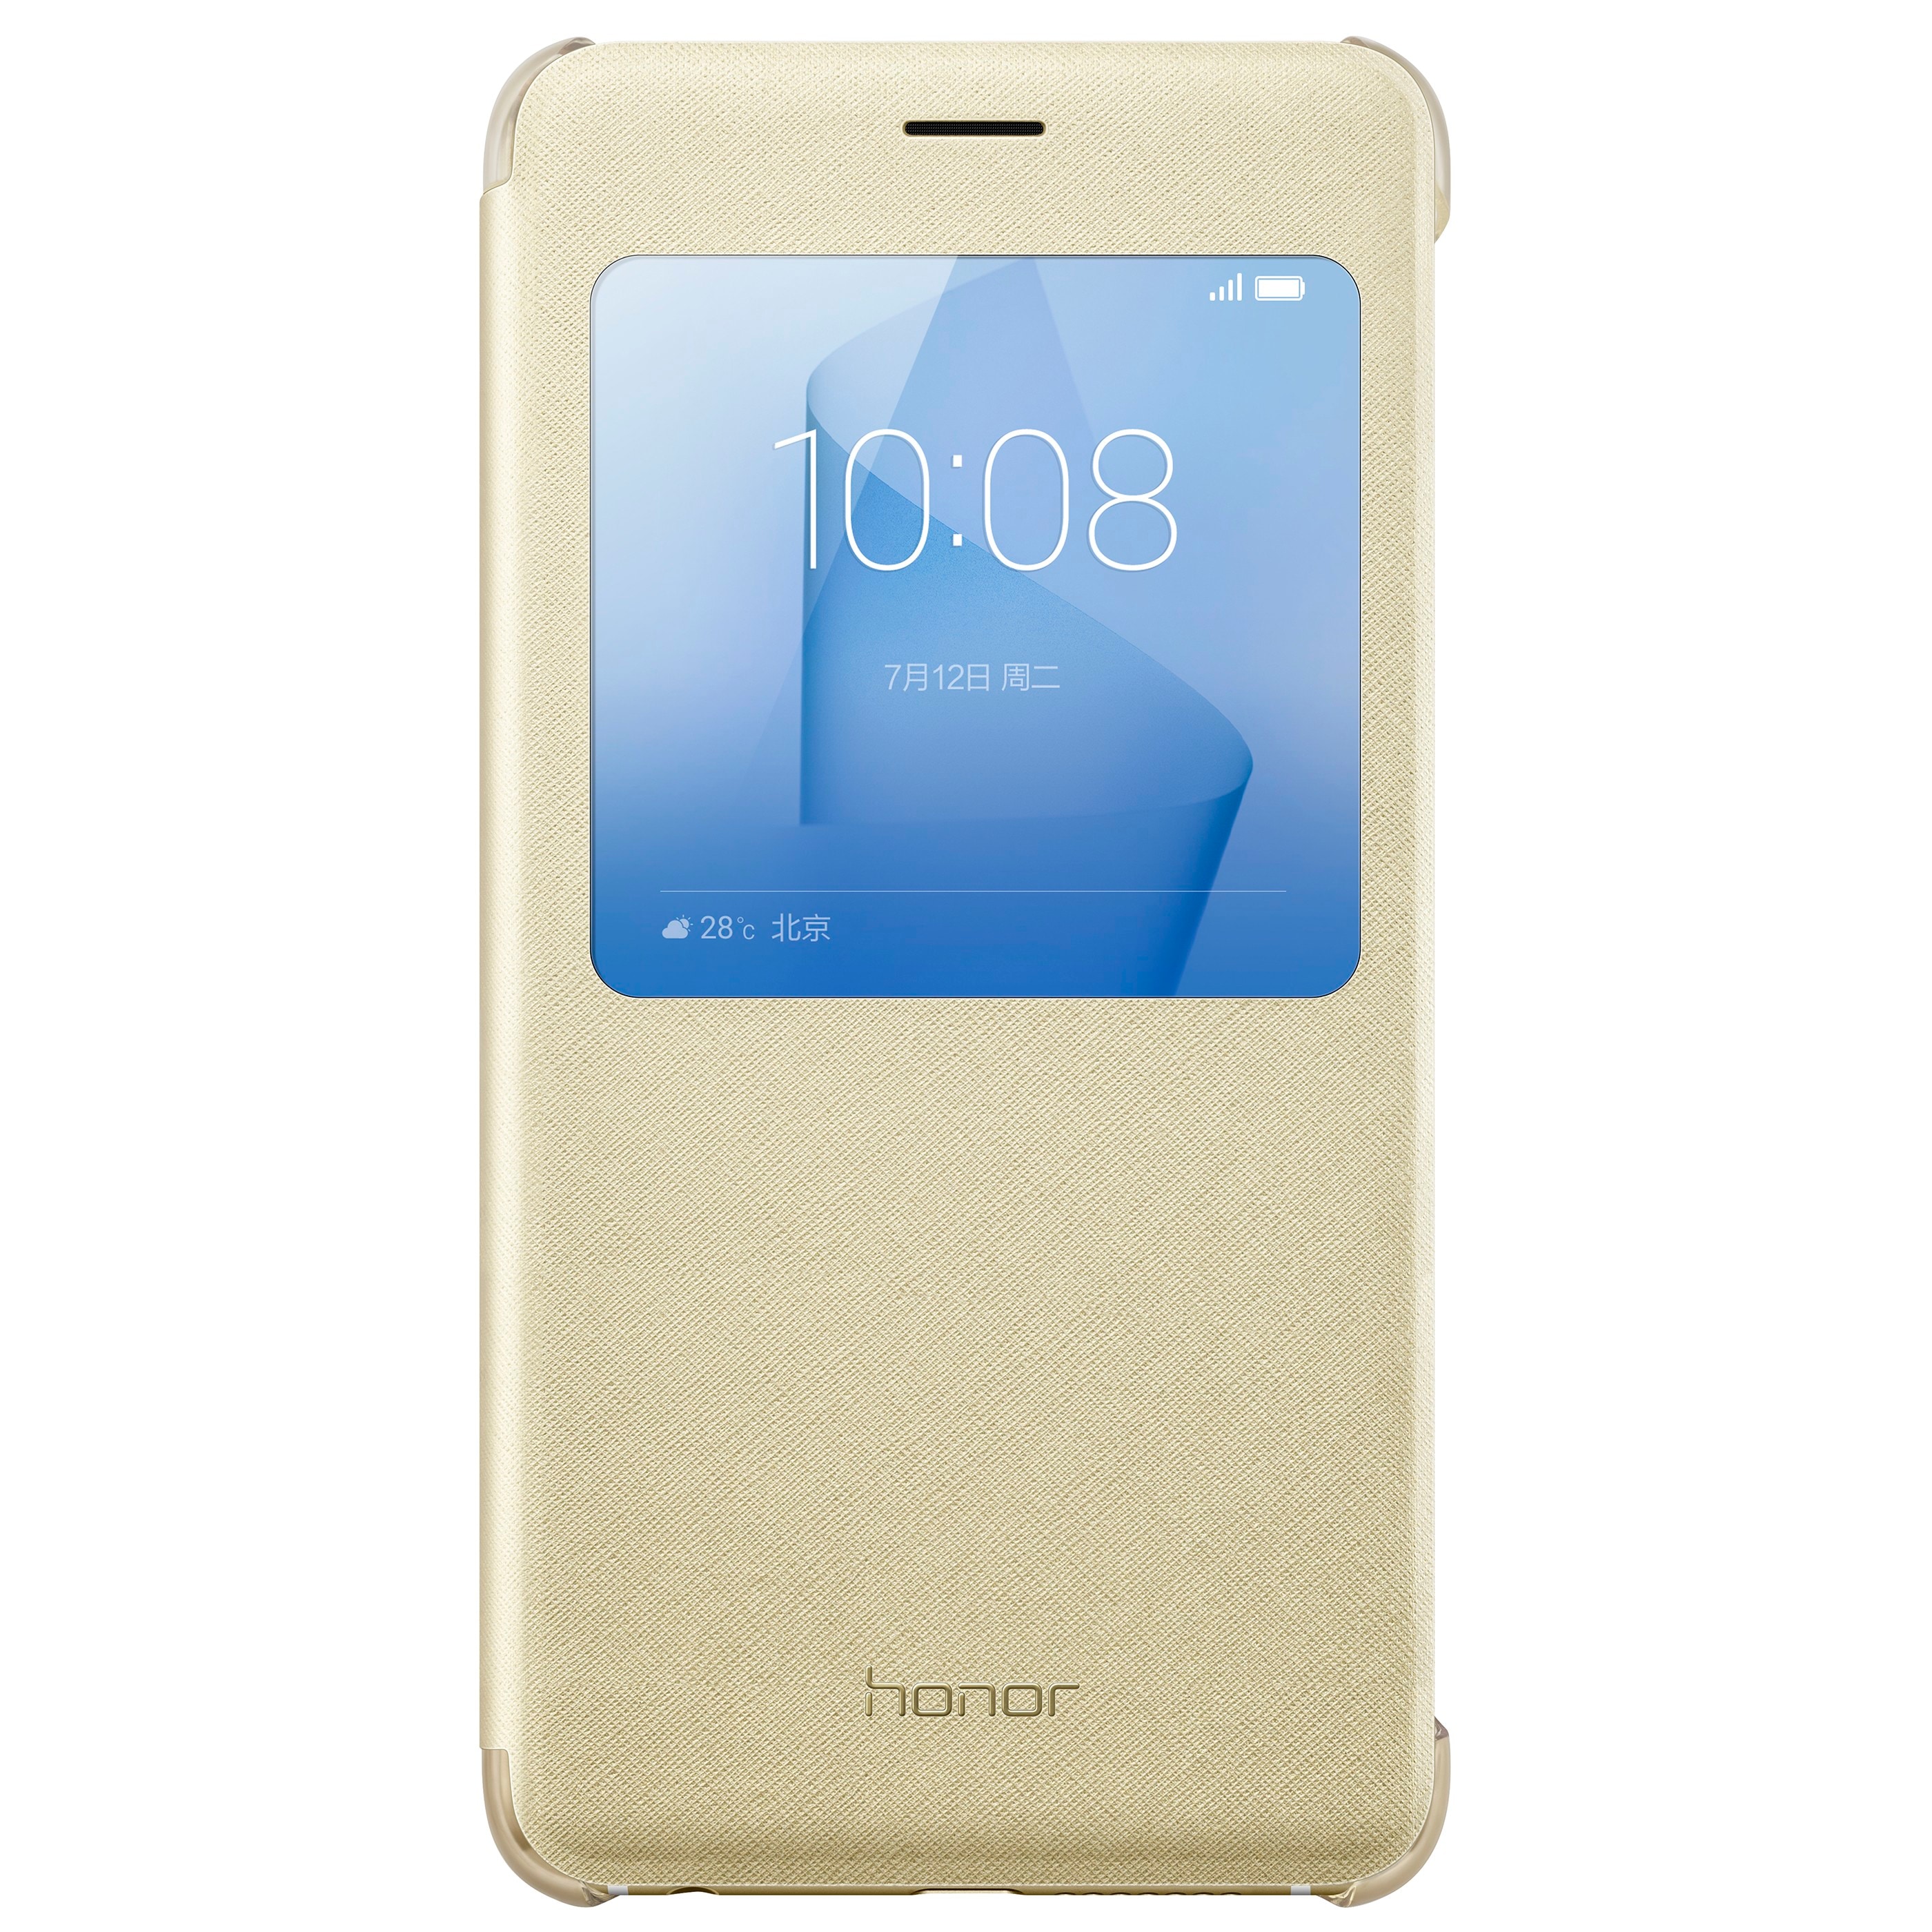 Huawei view fodral för Honor 8 (guld) - Skal och Fodral - Elgiganten